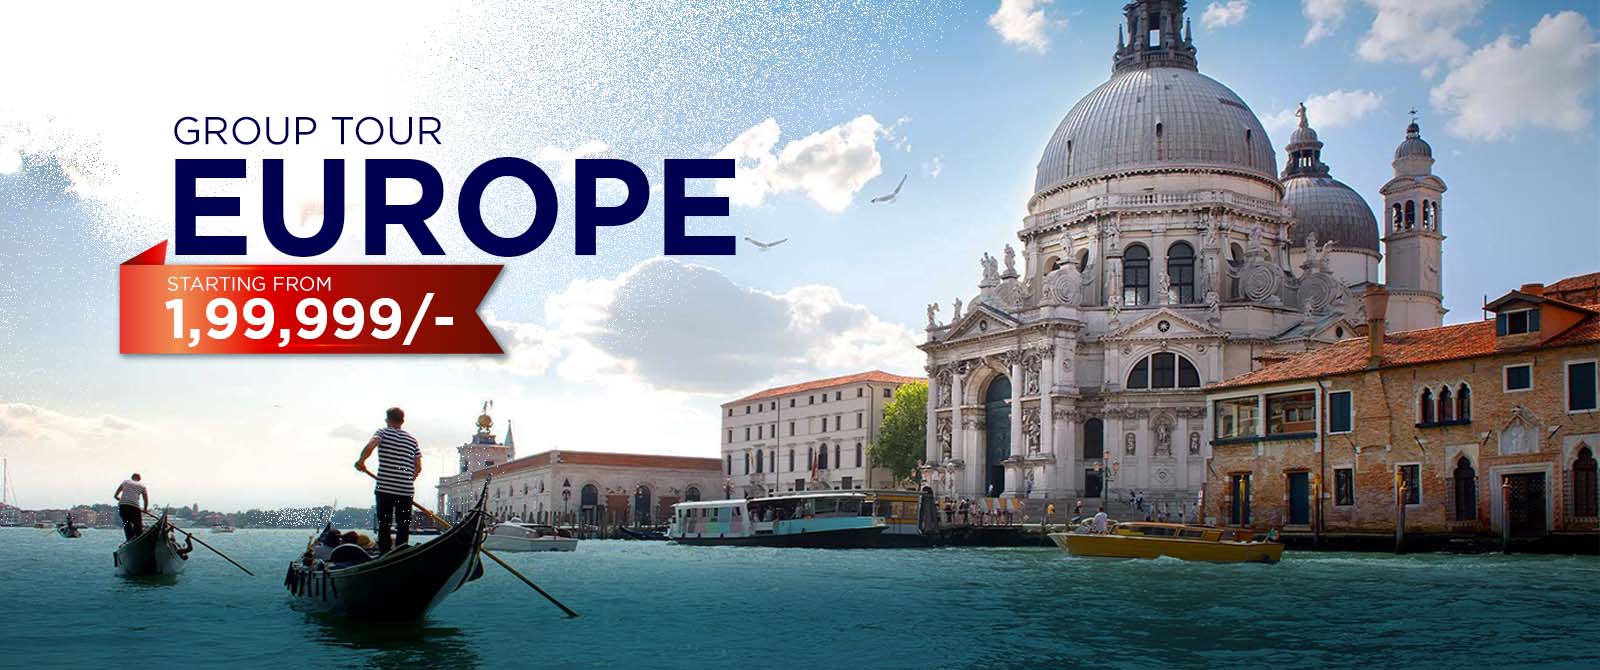 europe-tour-banner